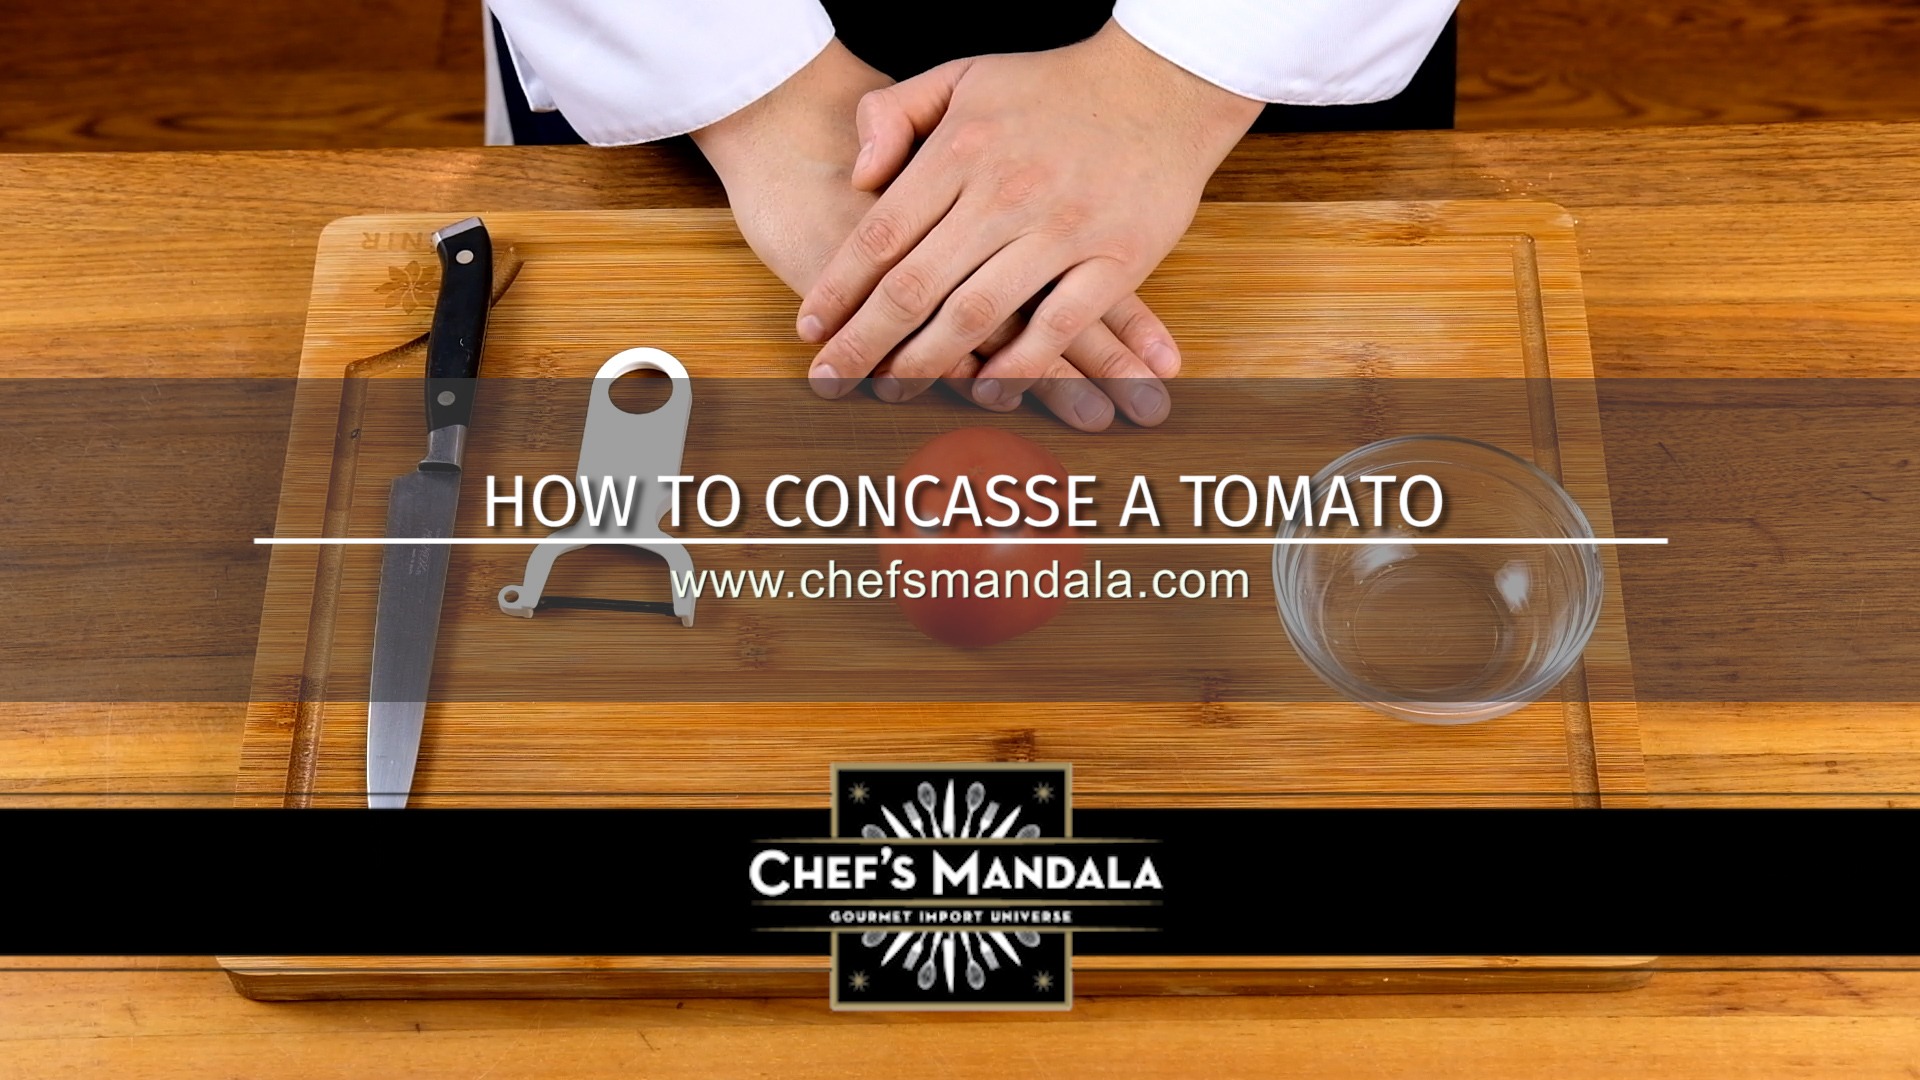 HOW TO DO TOMATO CONCASSE